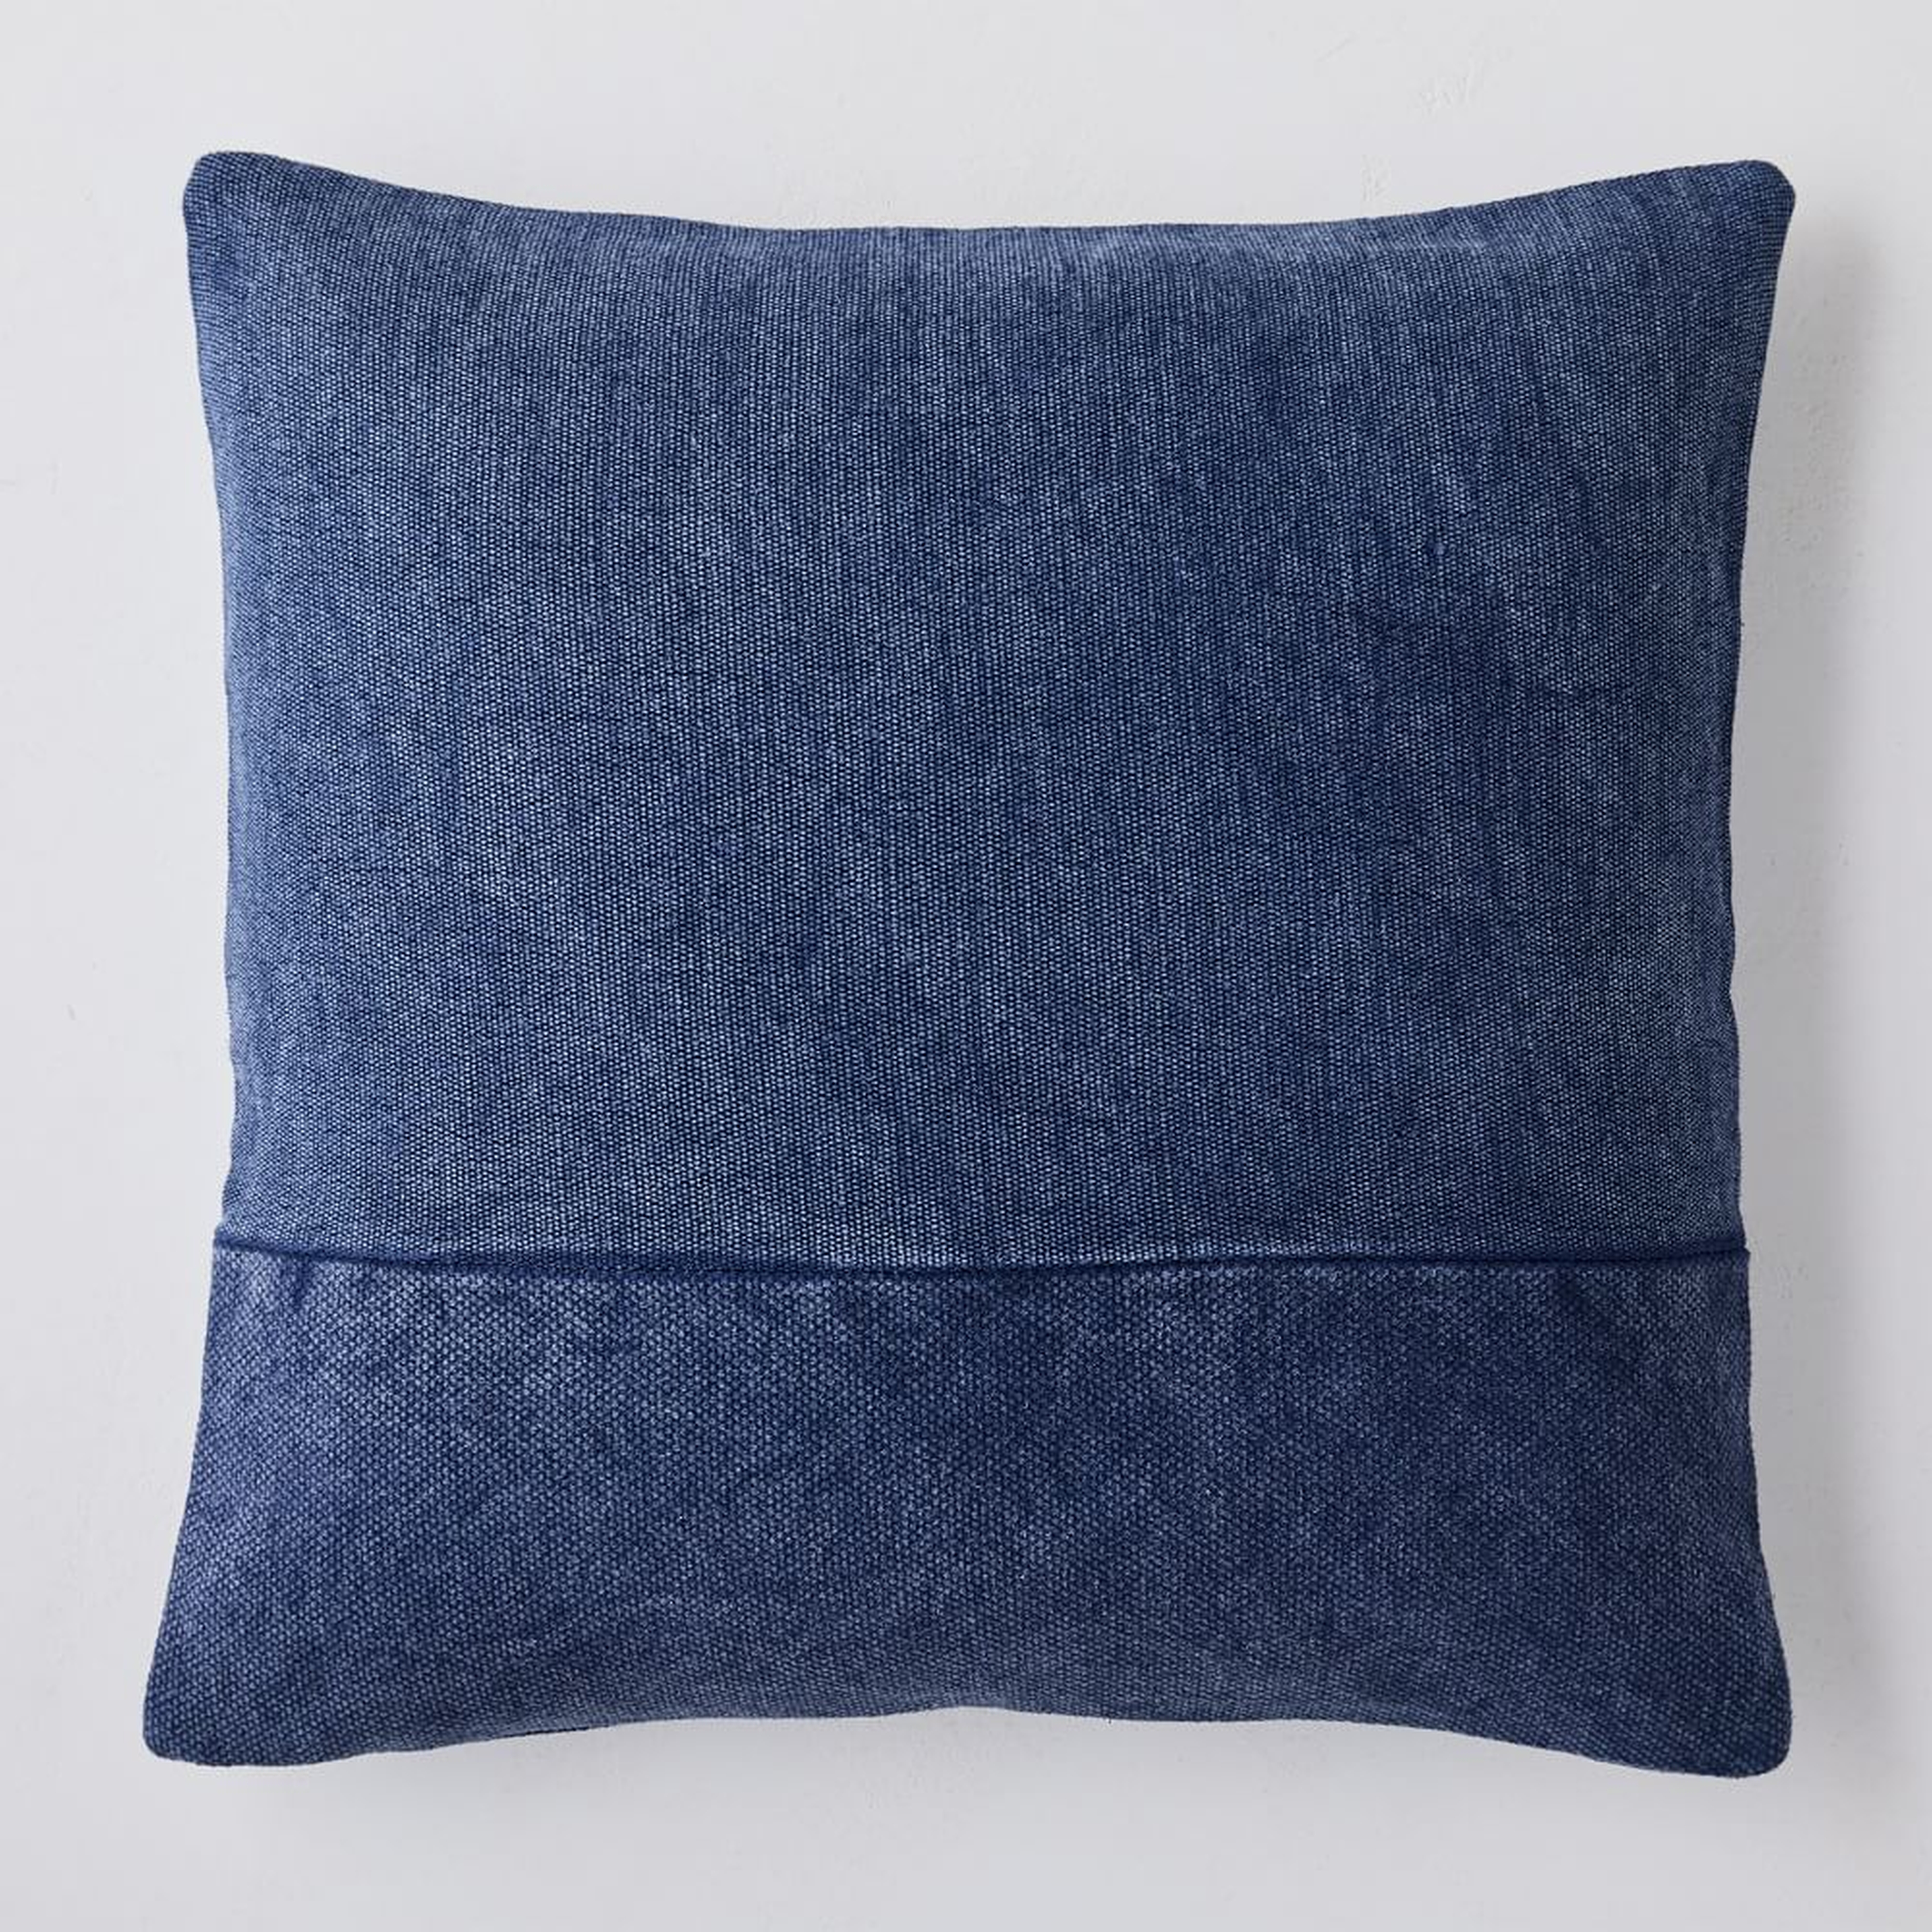 Cotton Canvas Pillow Cover, 24"x24", Midnight - West Elm